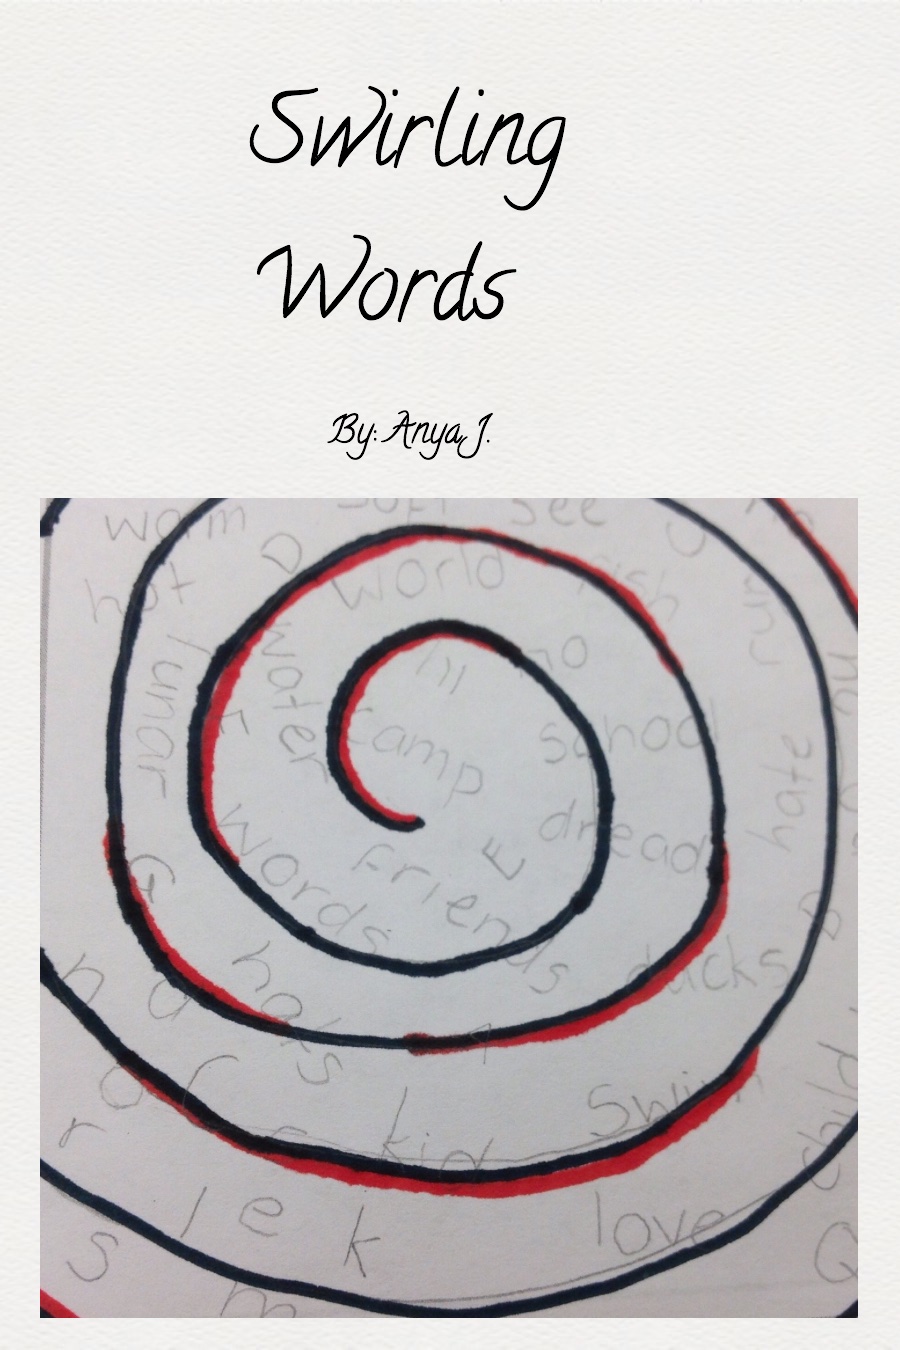 Swirling Words by Anya J